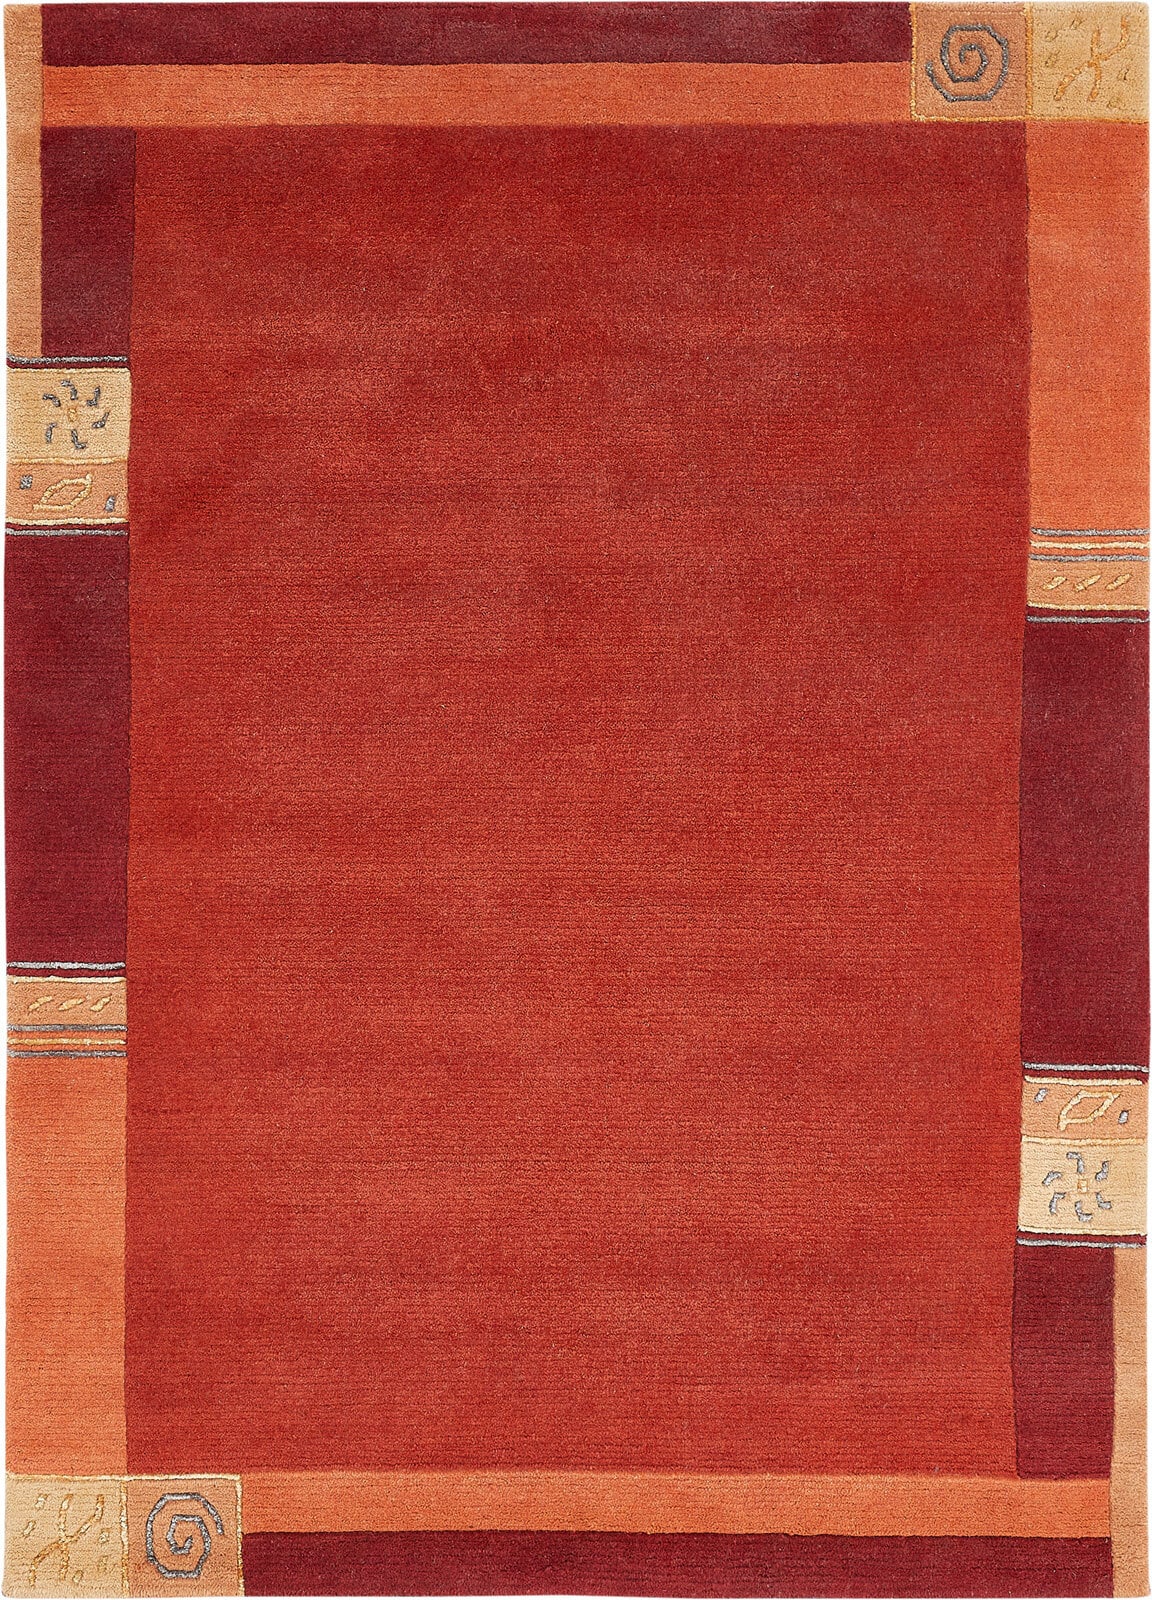 Teppich MANALI 90 x 160 cm rot